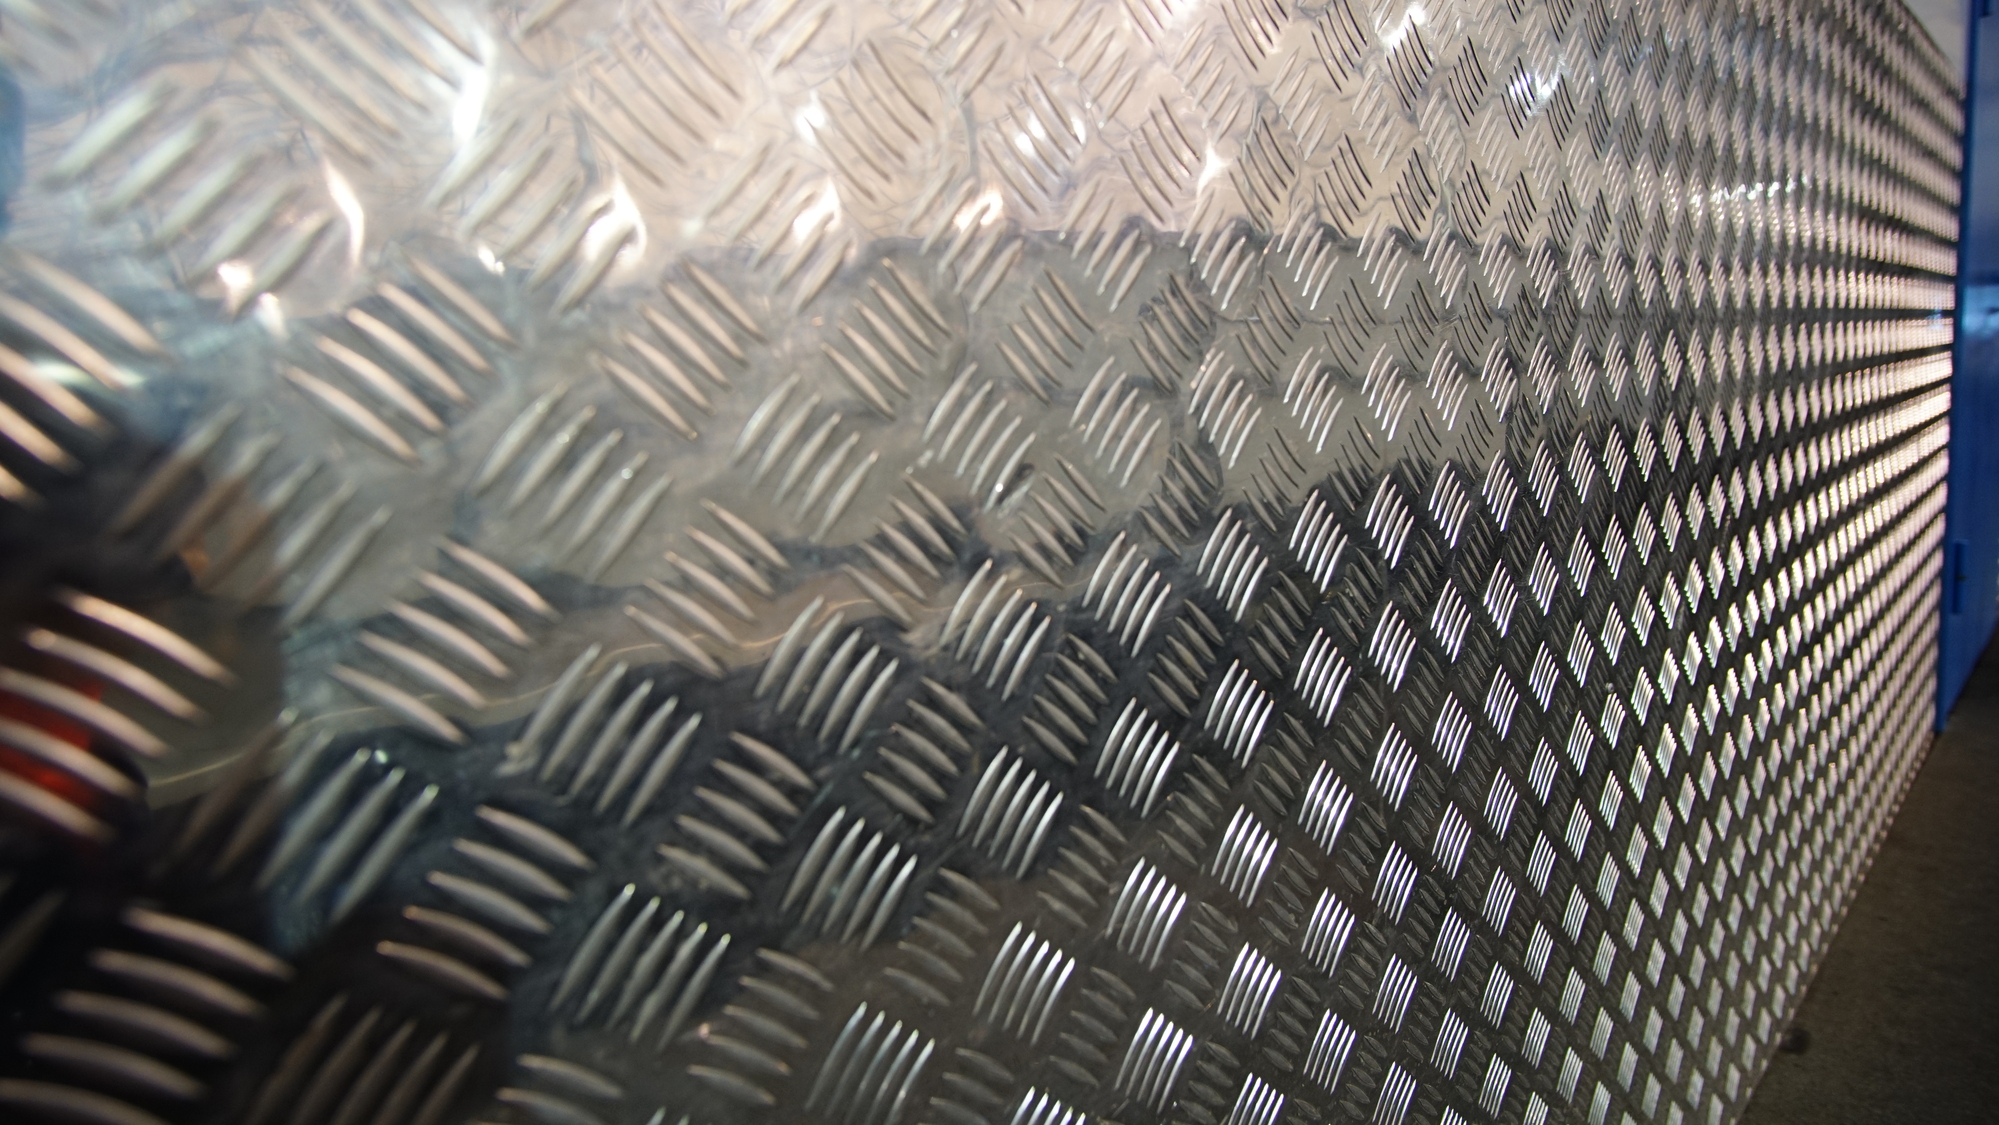 Checkered Plates & Coils